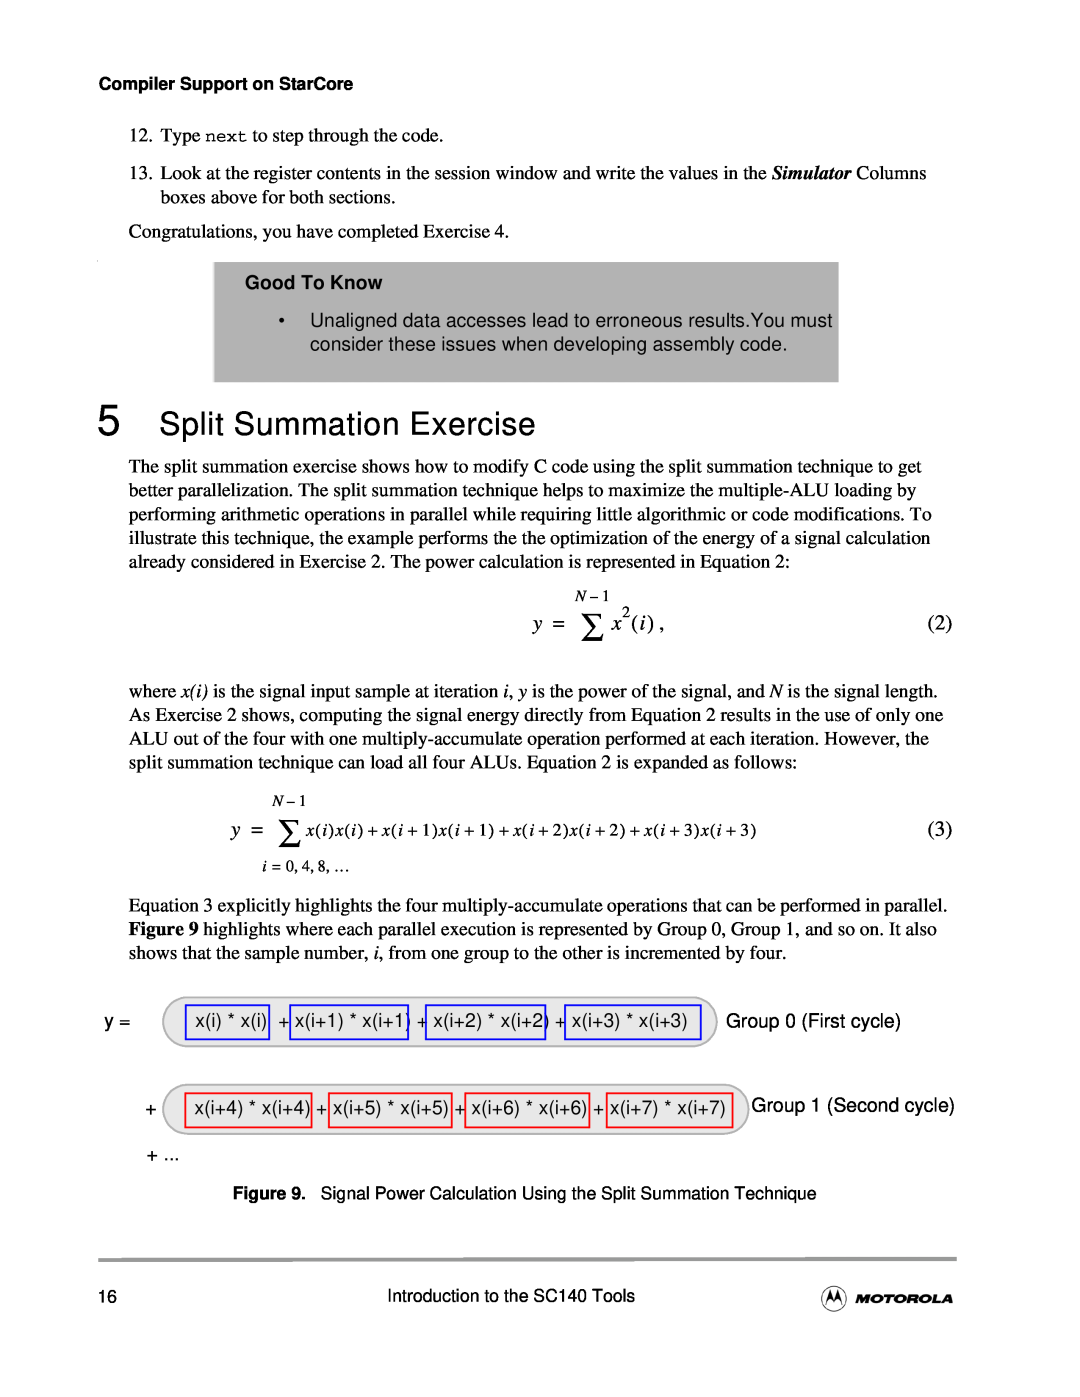 Motorola SC140 user manual Split Summation Exercise, y = ∑ x 2, Good To Know 